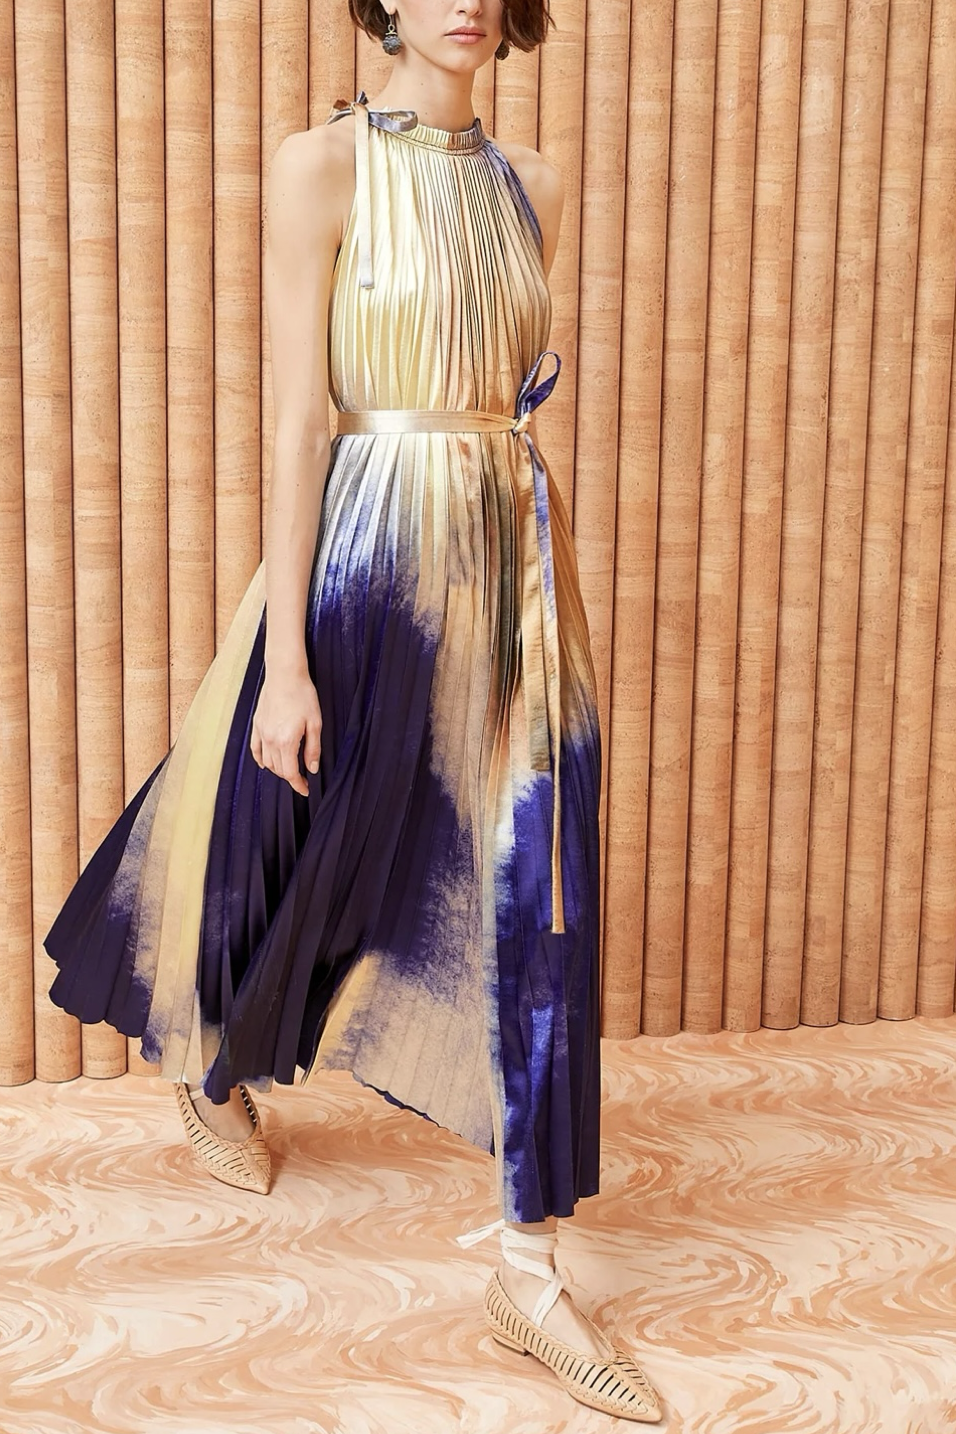 Image of model wearing Ulla Johnson Amiko dress in mirage